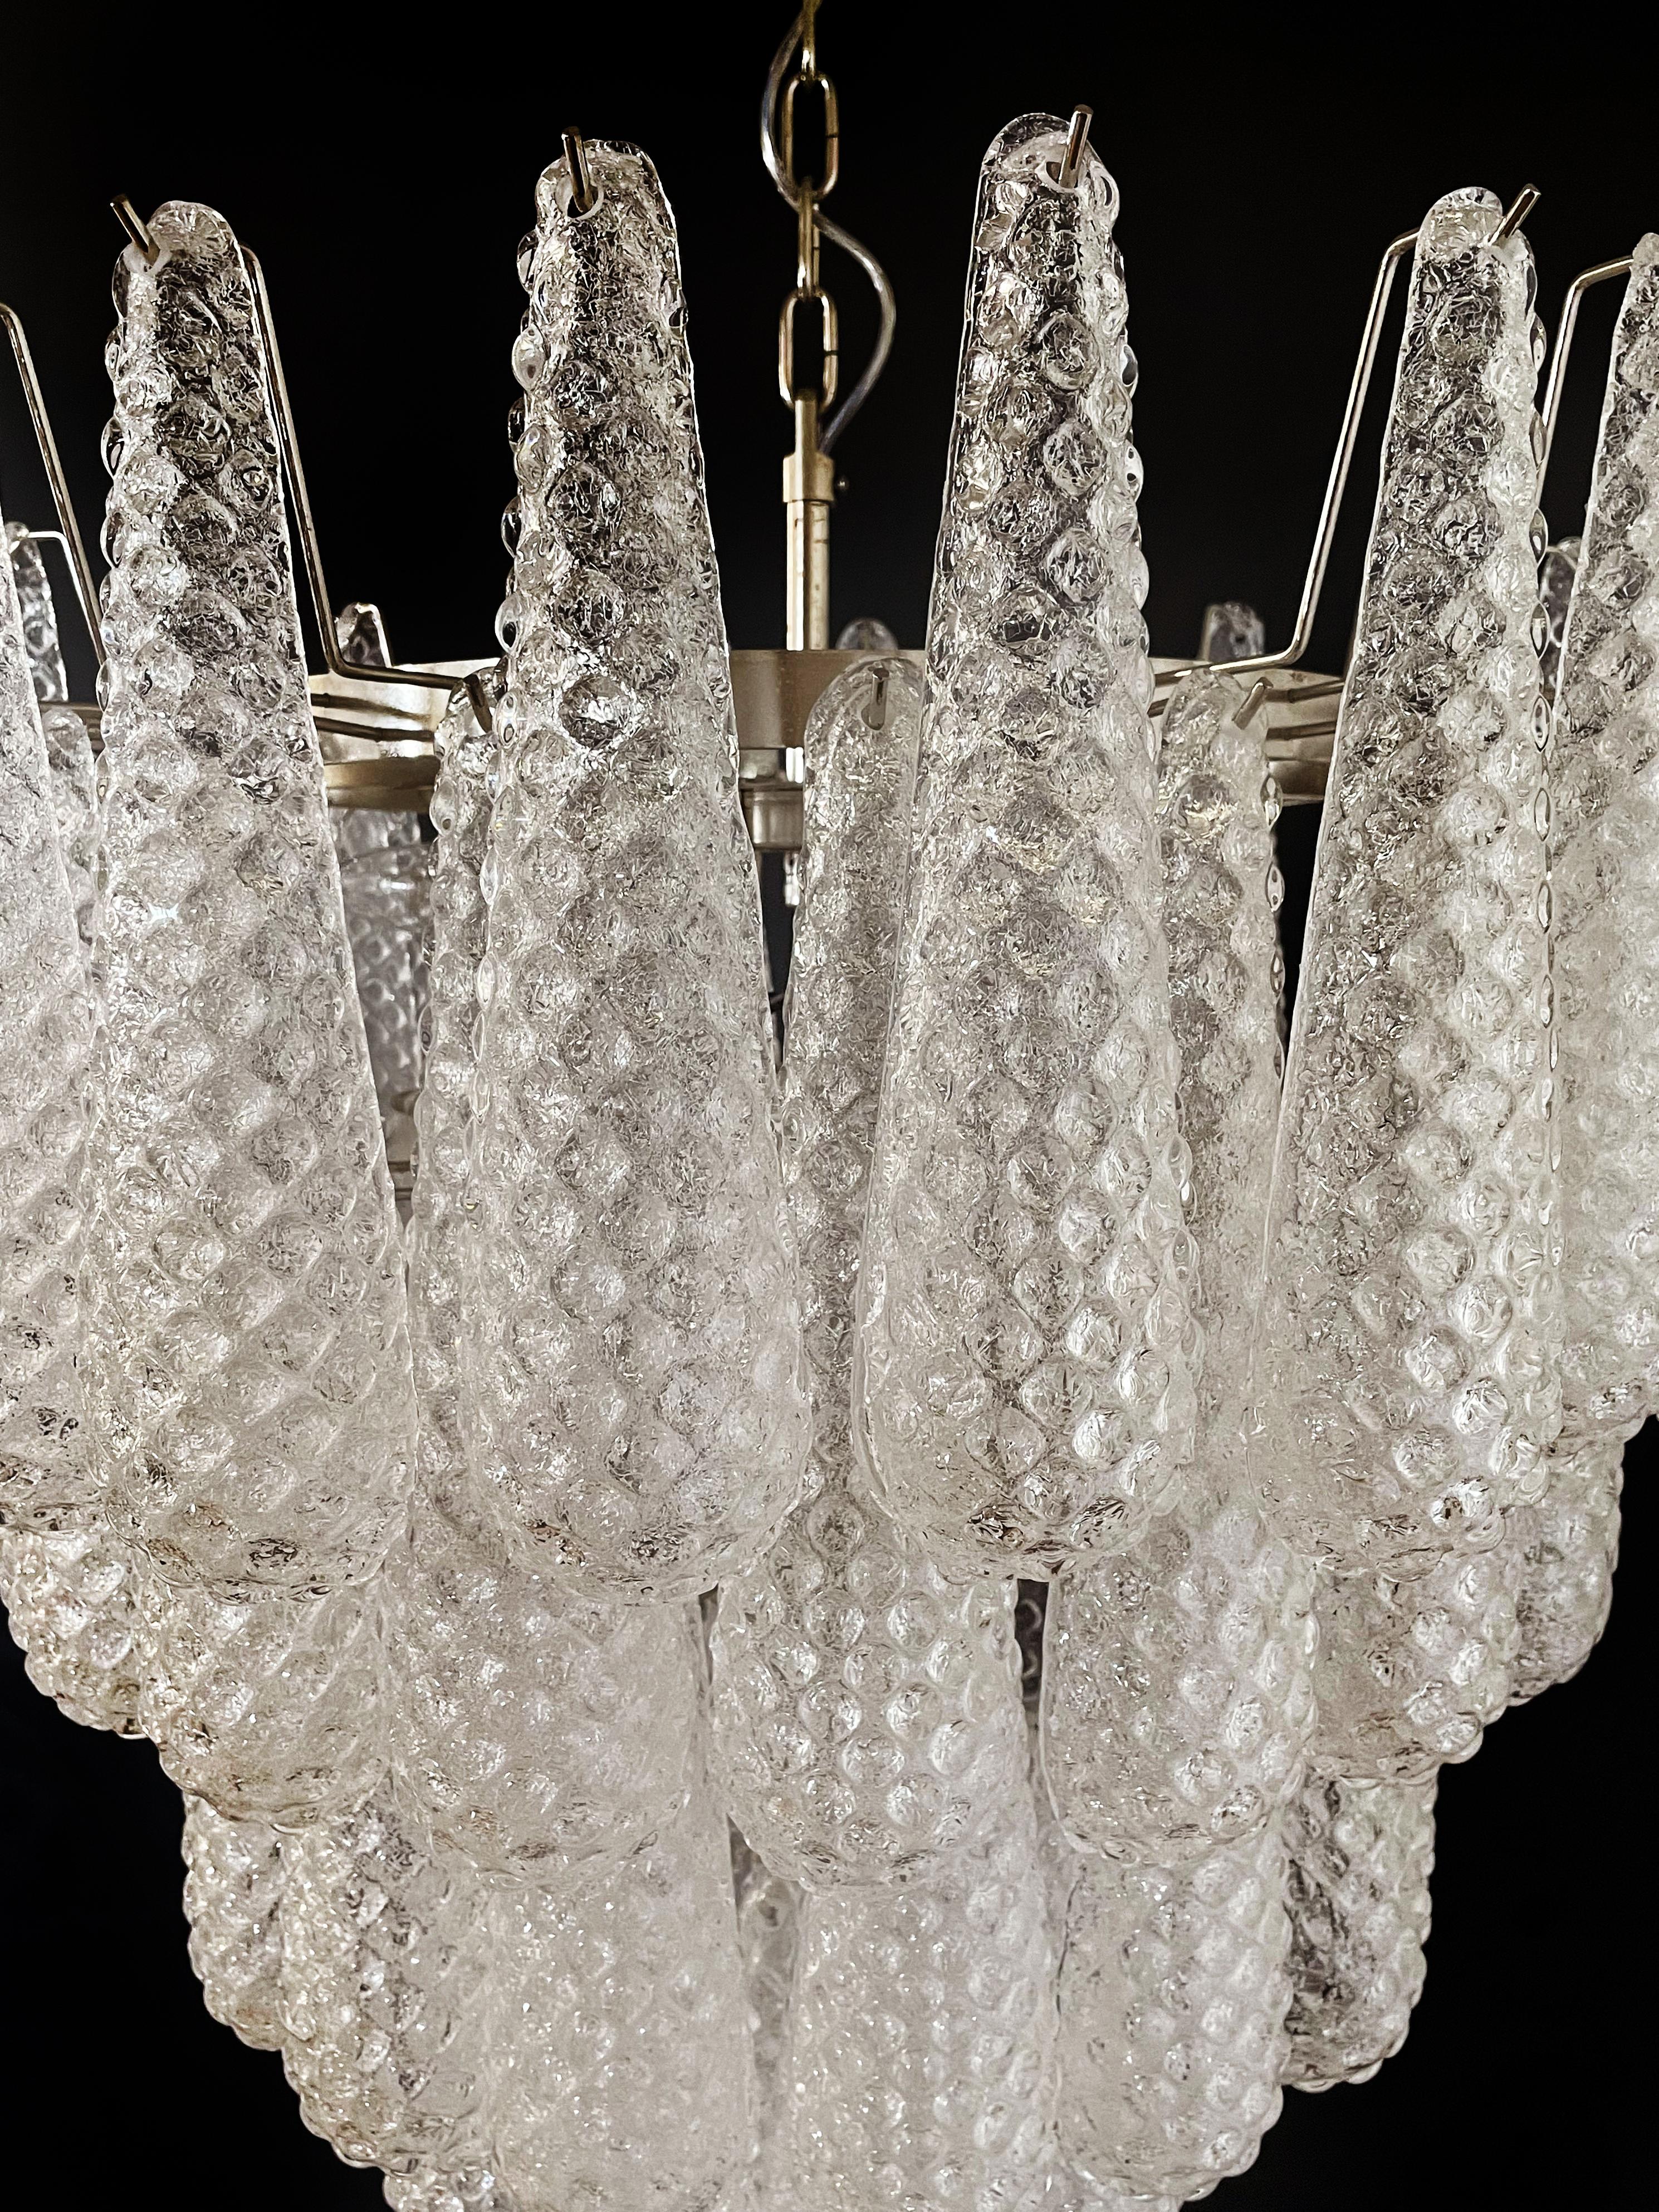 Magnificent Italian vintage Murano glass chandeliers - 75 glass petals drop For Sale 7